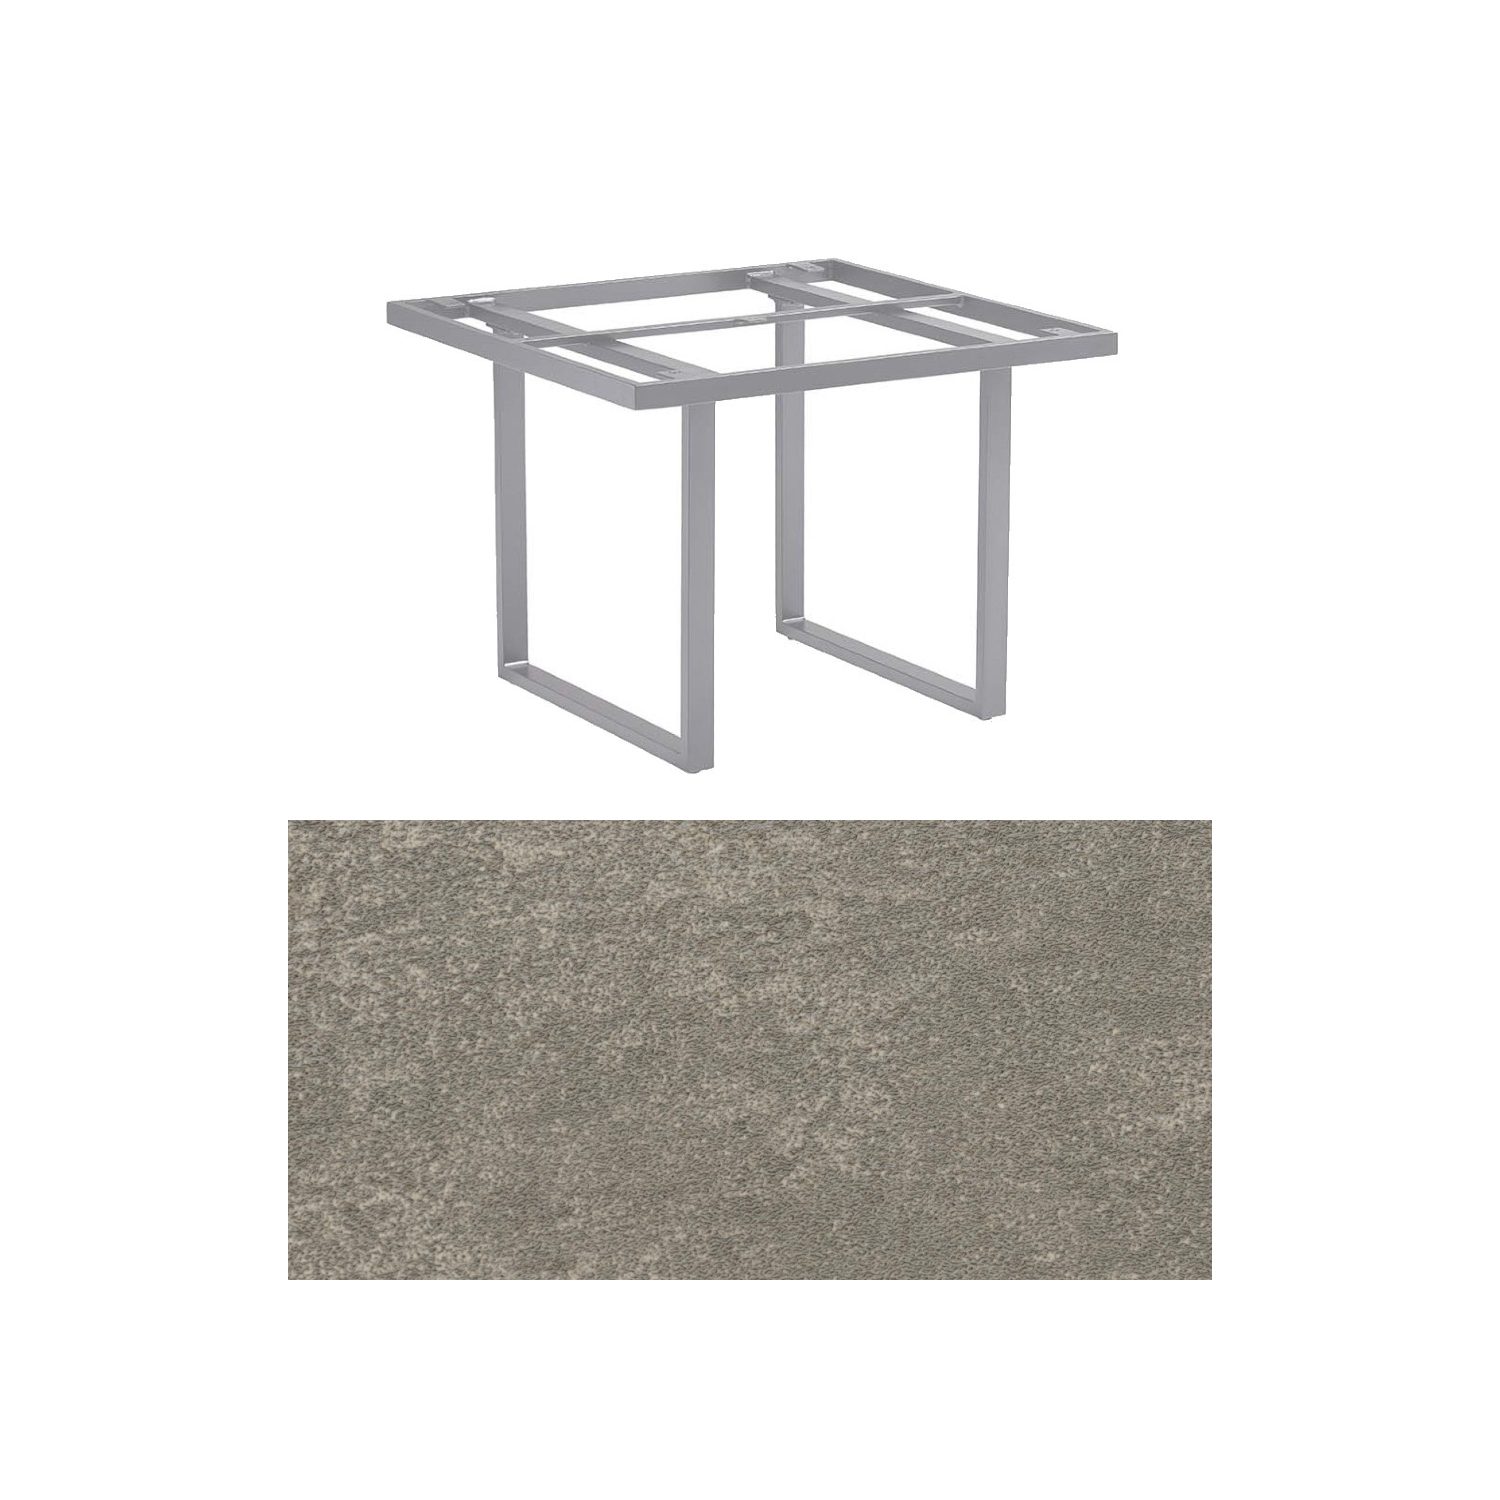 Kettler "Skate" Gartentisch Casual Dining, Gestell Aluminium silber, Tischplatte Keramik grau-taupe, 95x95 cm, Höhe ca. 68 cm